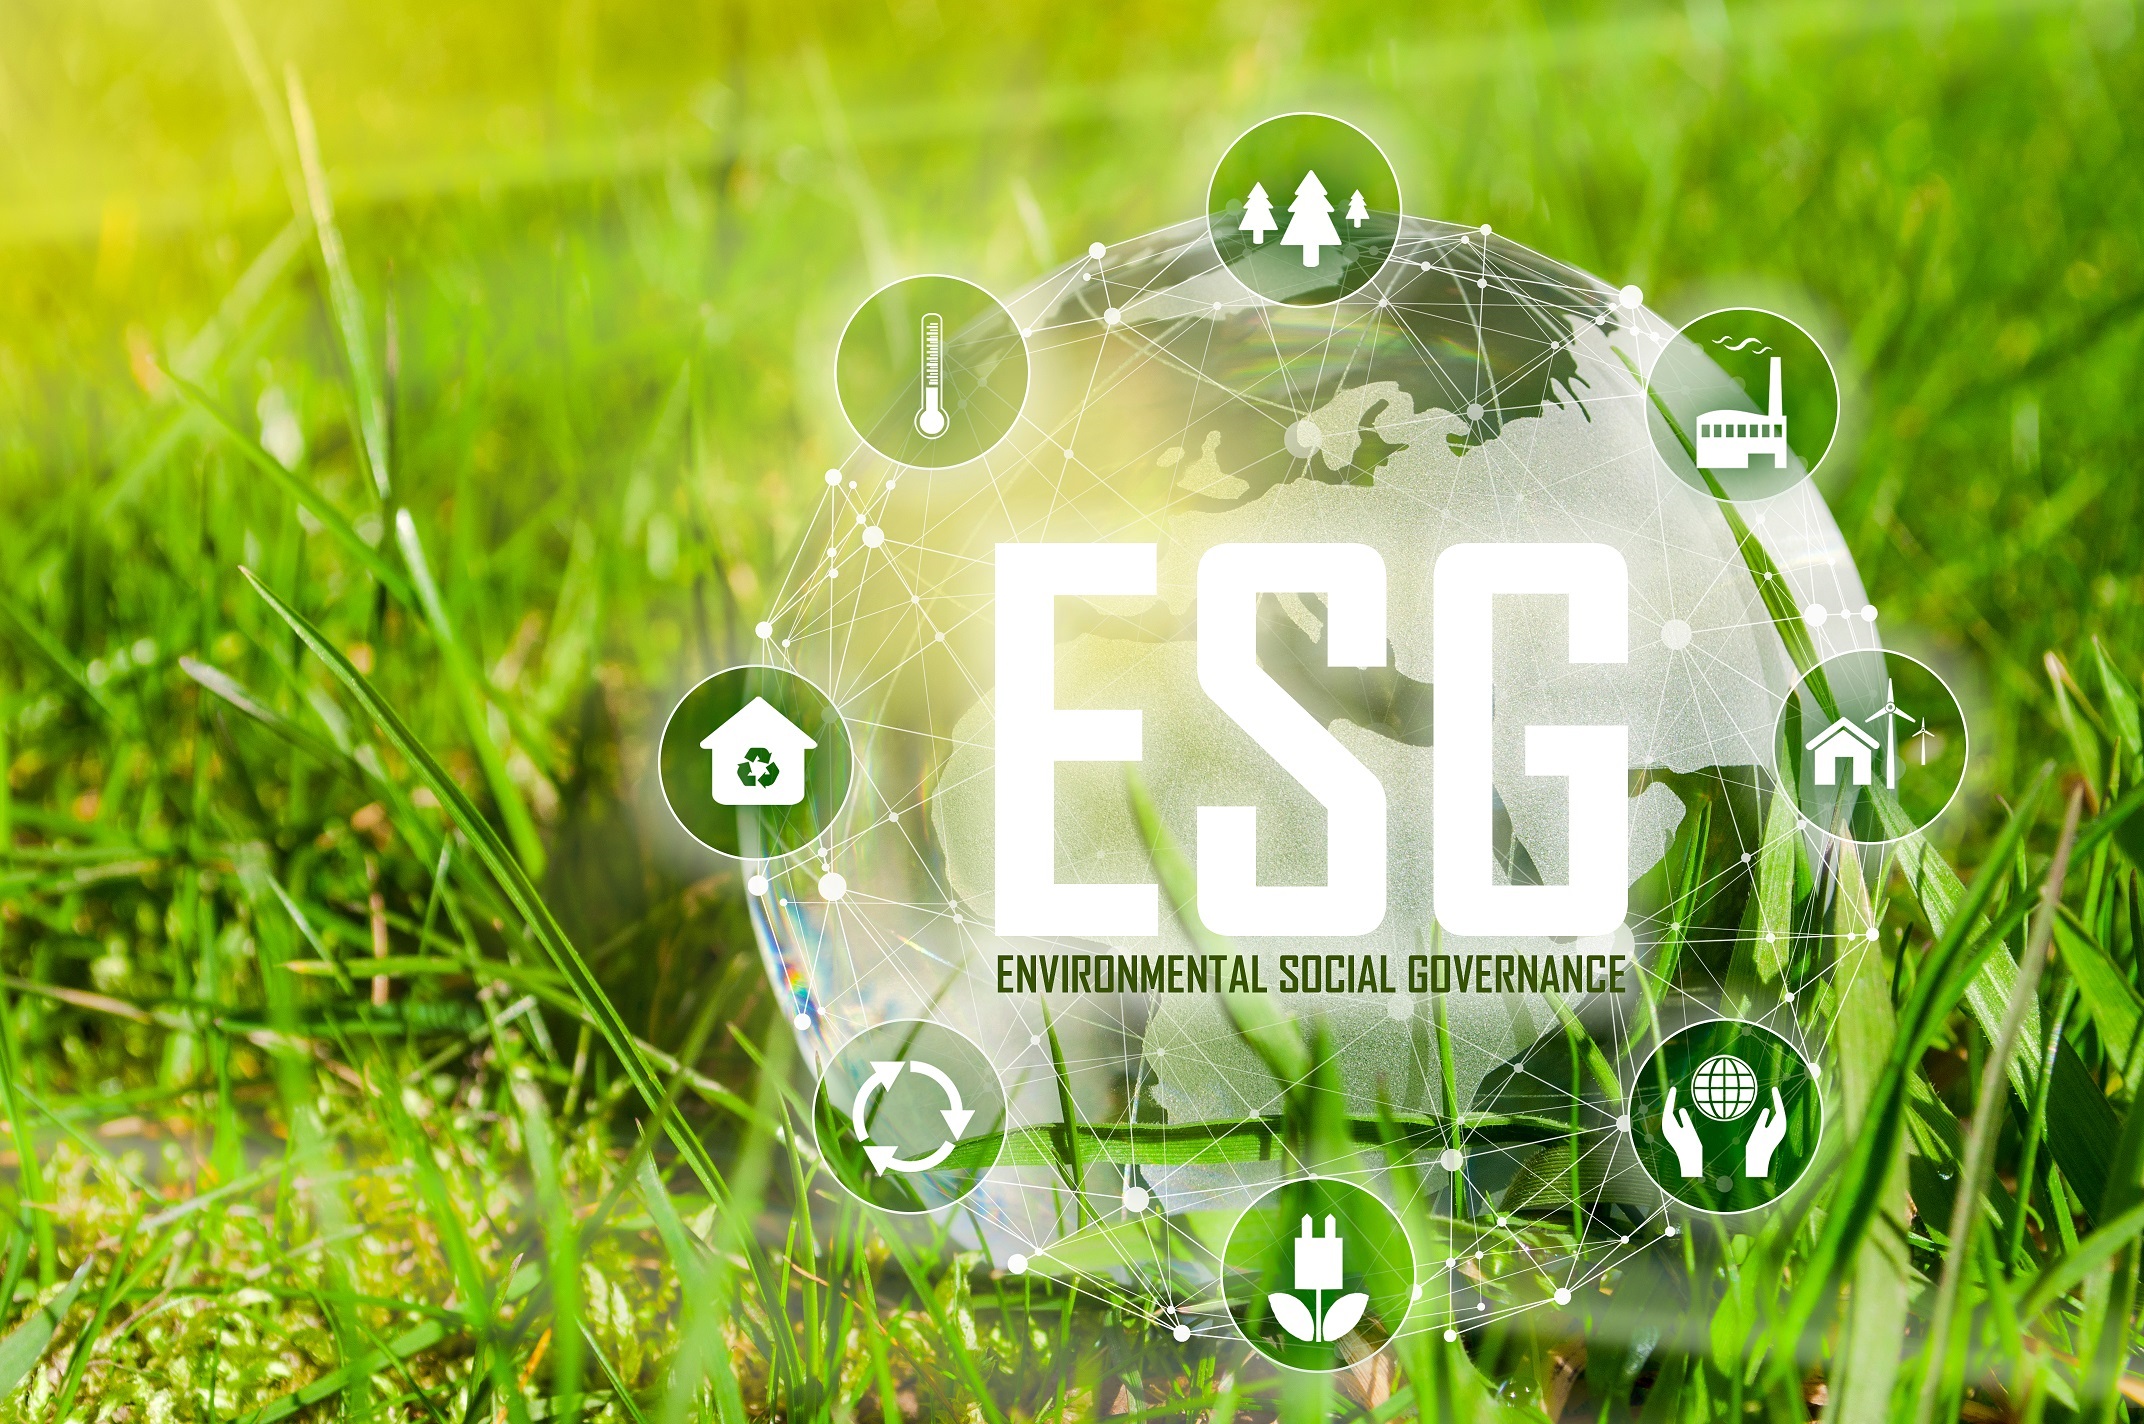 Industrieunternehmen mit Nachholbedarf bei ESG-Ratings